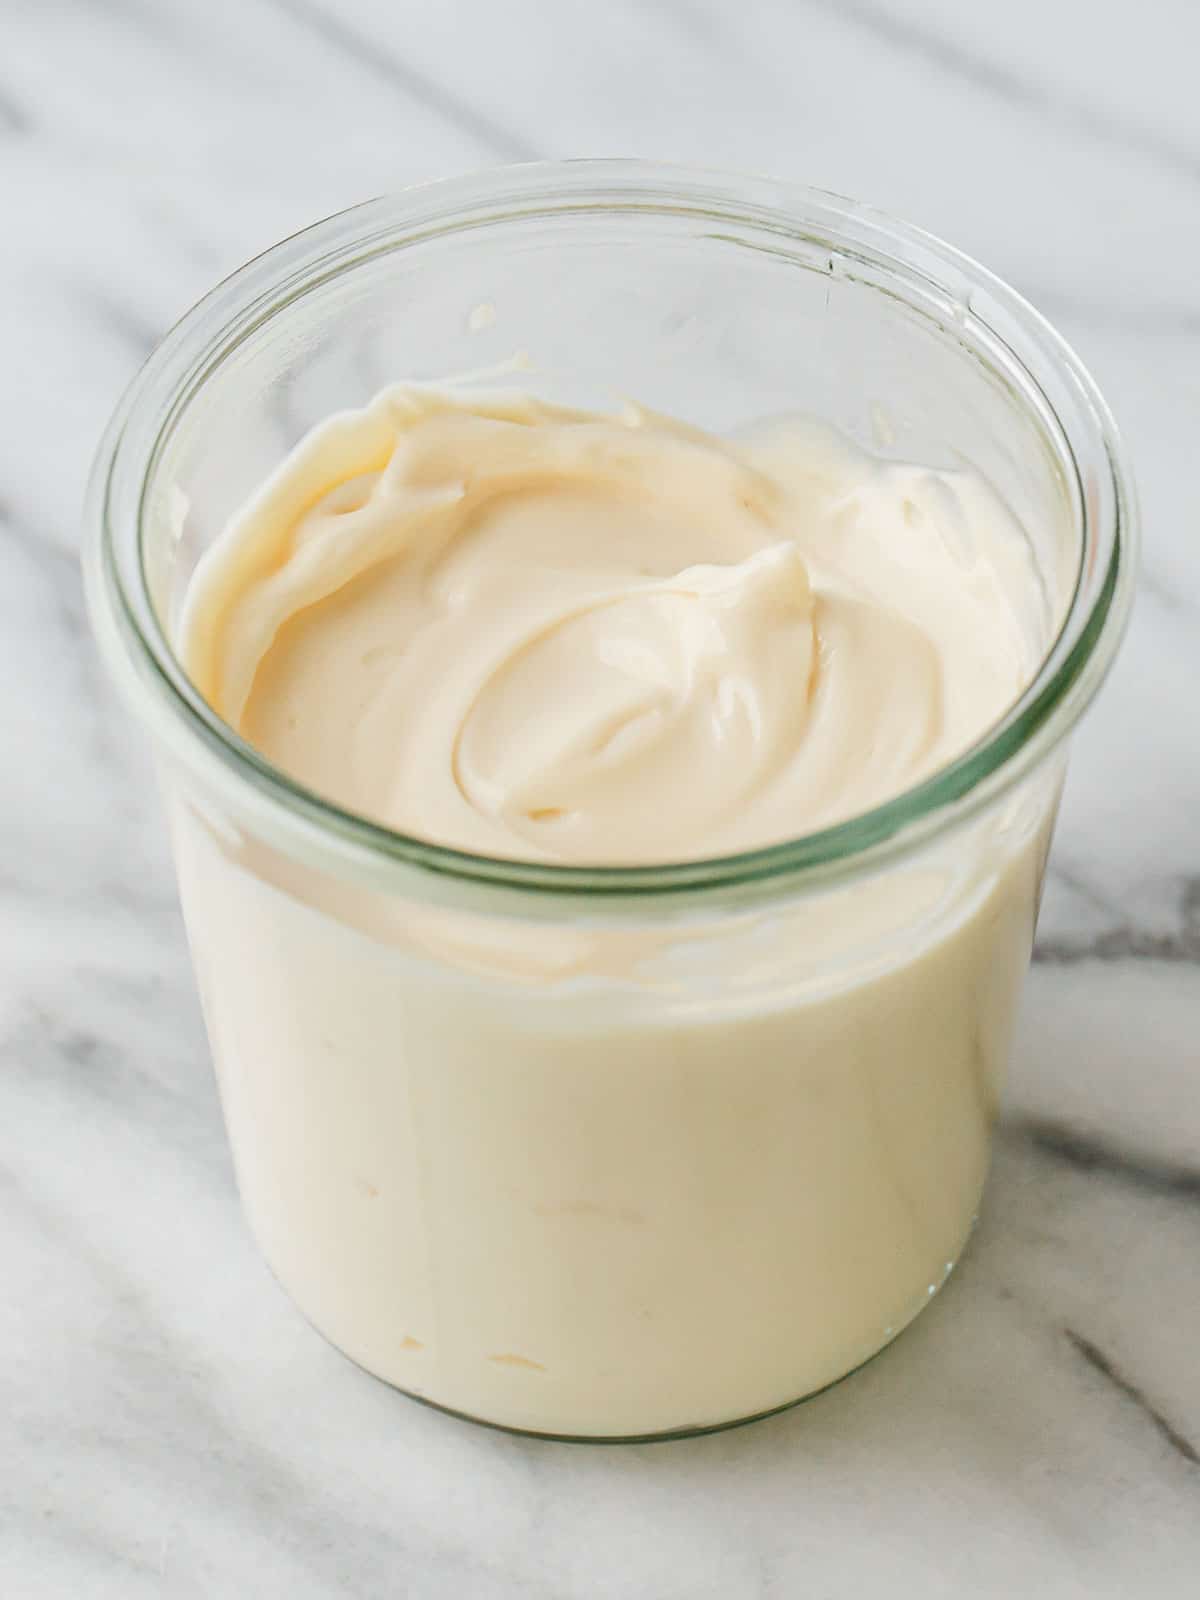 Homemade mayonnaise in a glass jar.